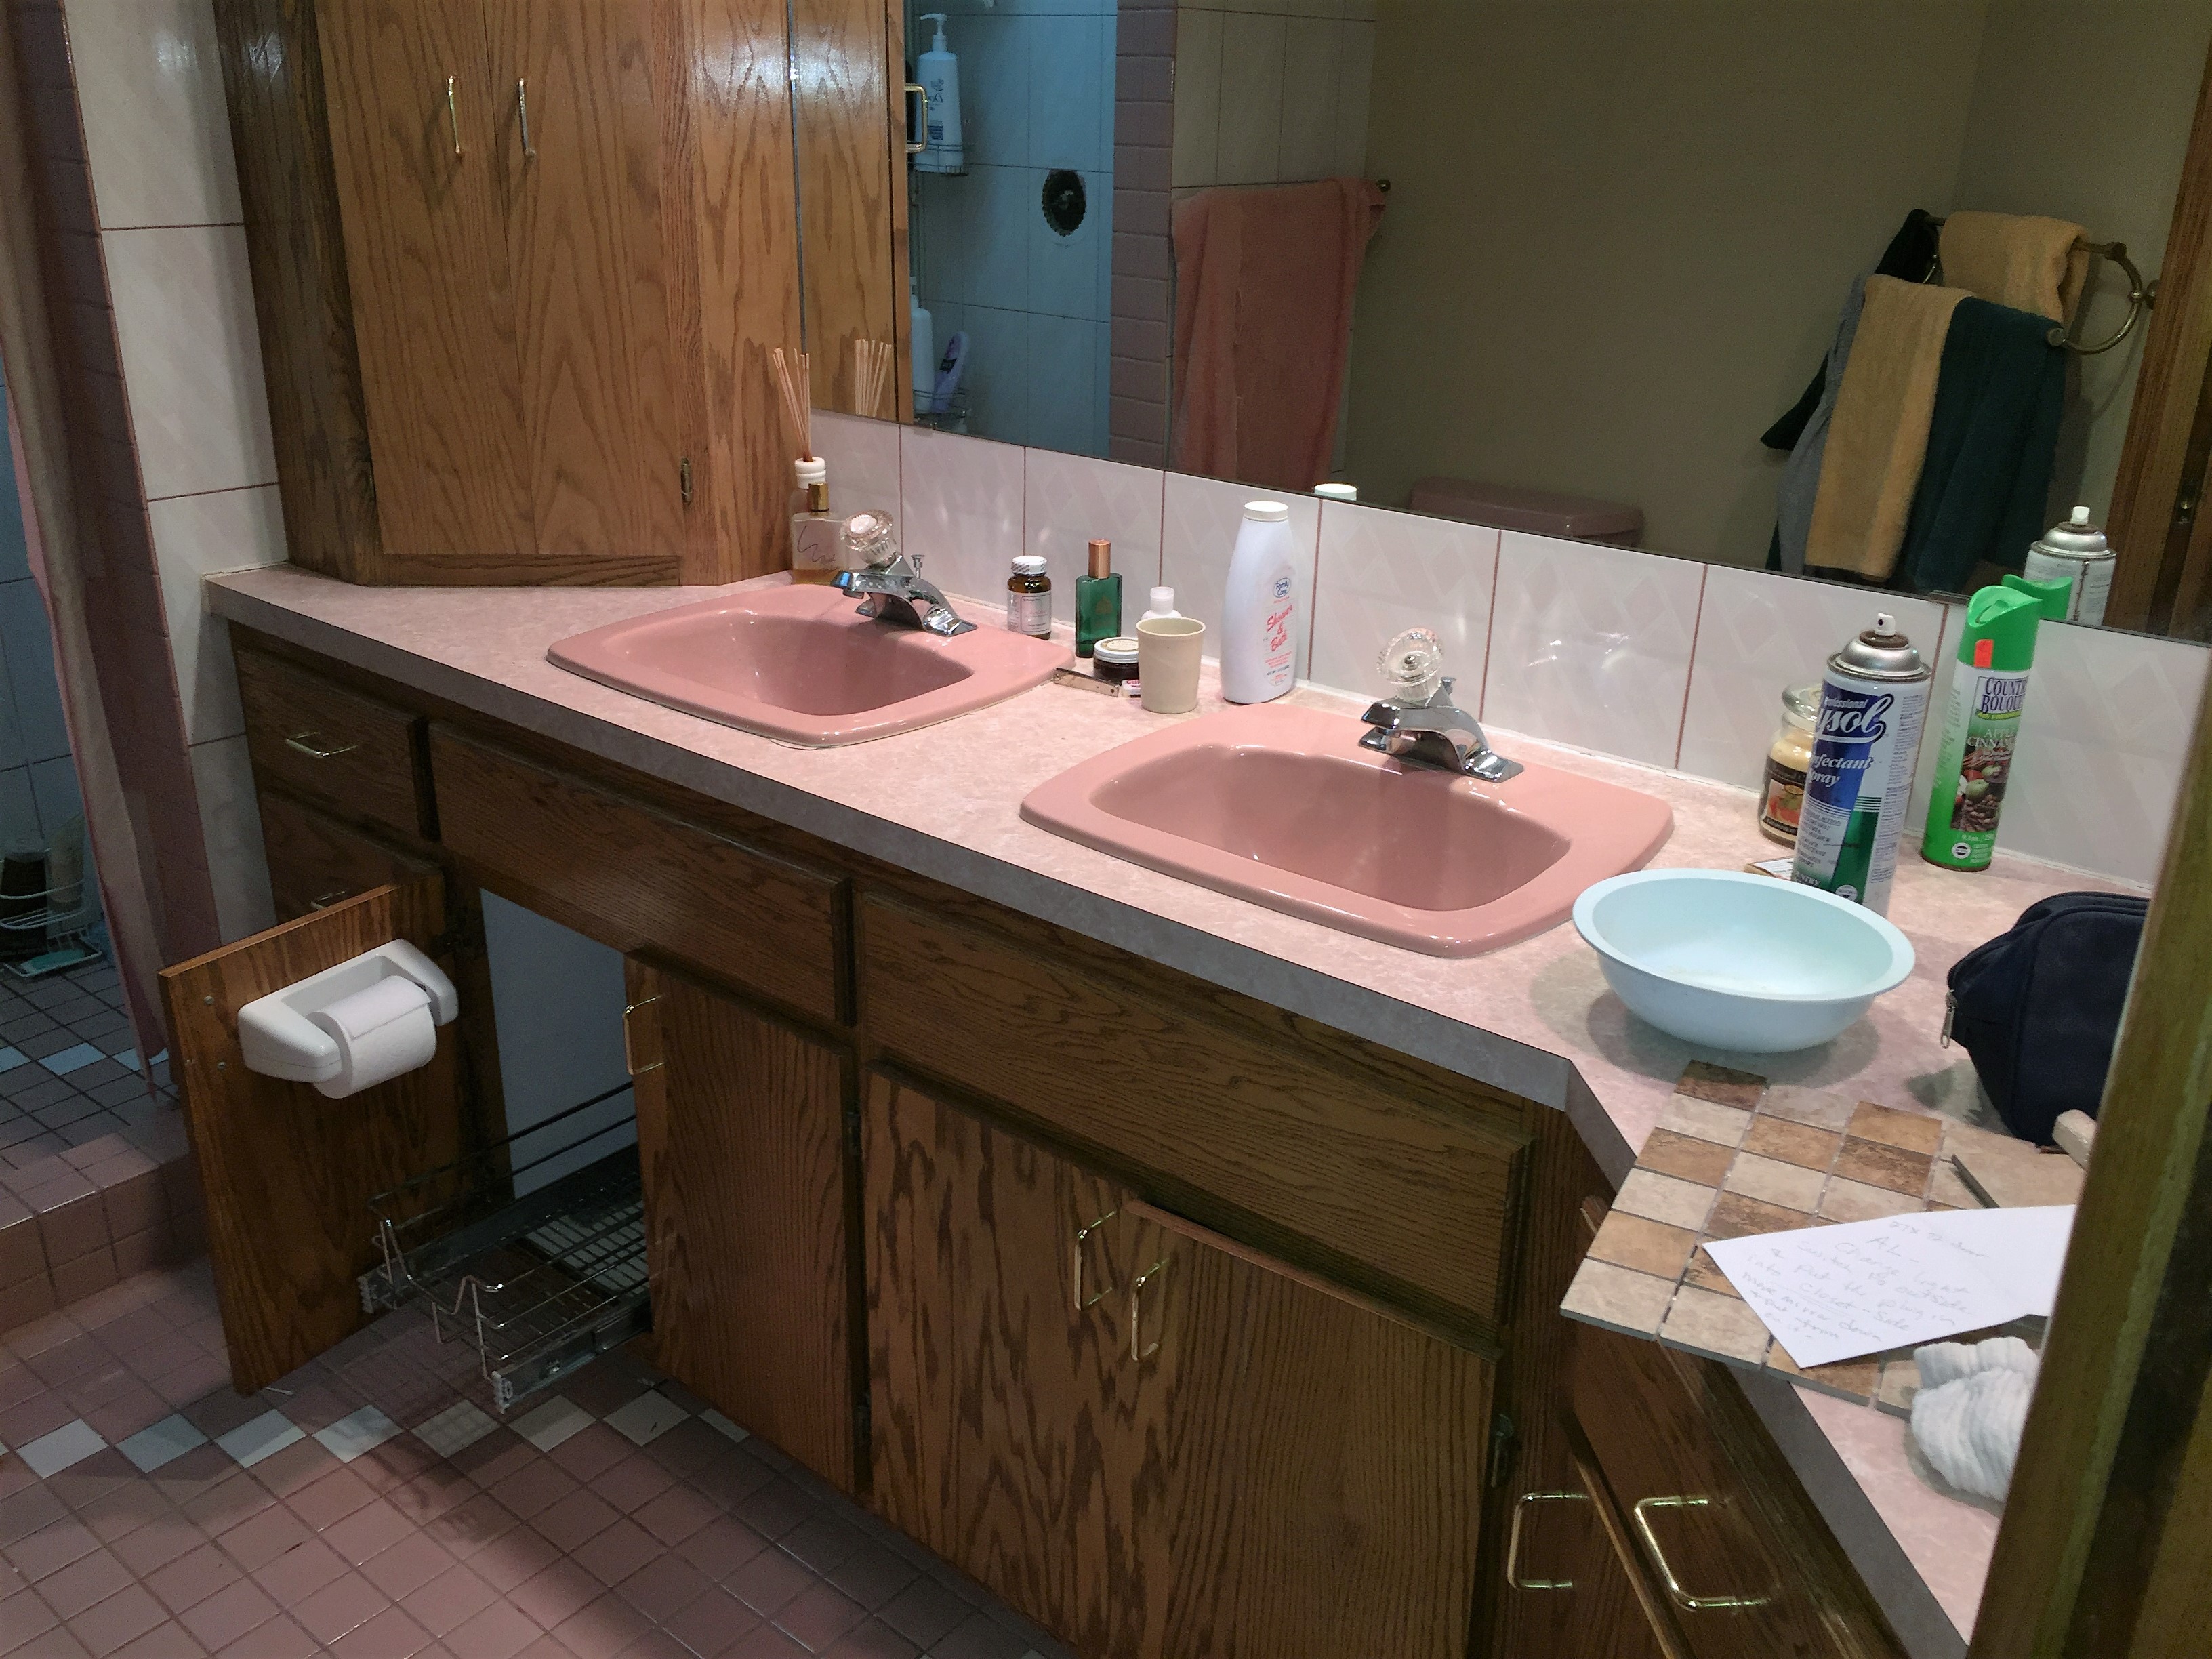 Ugly old pink countertop, sink, and floor before bathroom remodel